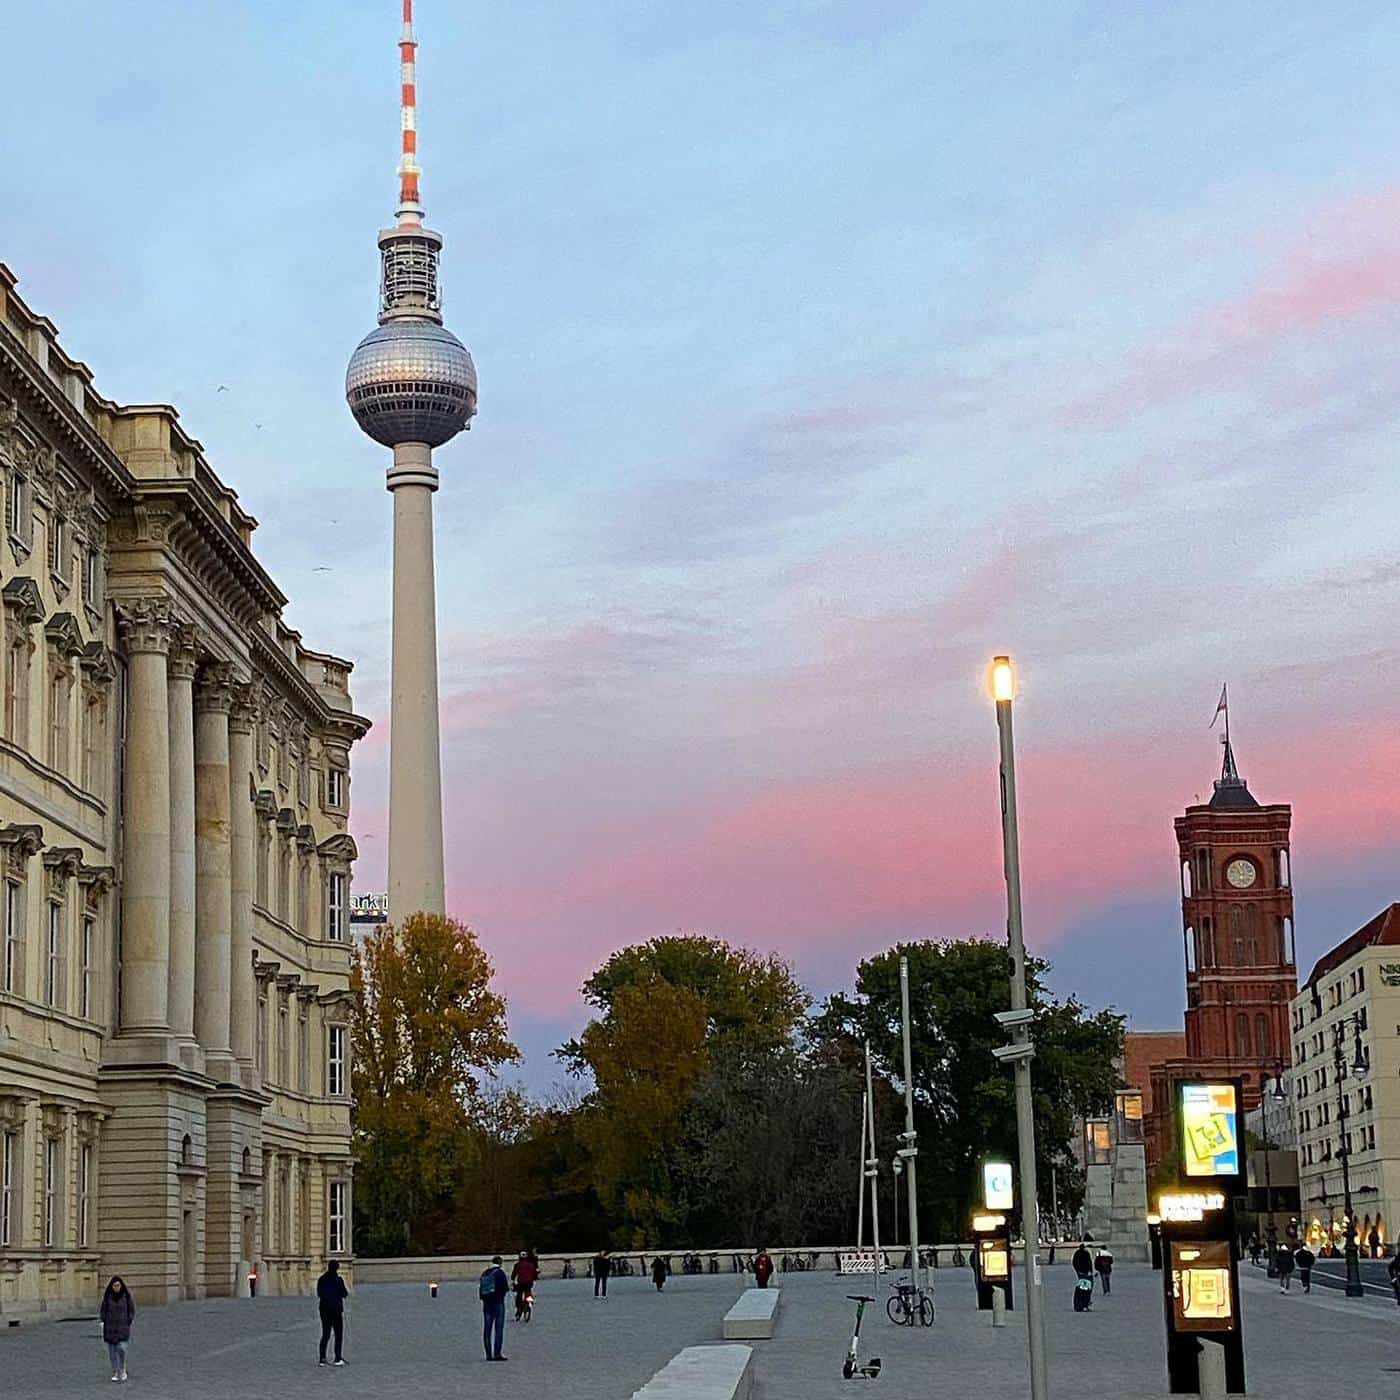 Am #Humboltforum #Berlin #Fernsehturm #fernsehturmberlin #visitberlin